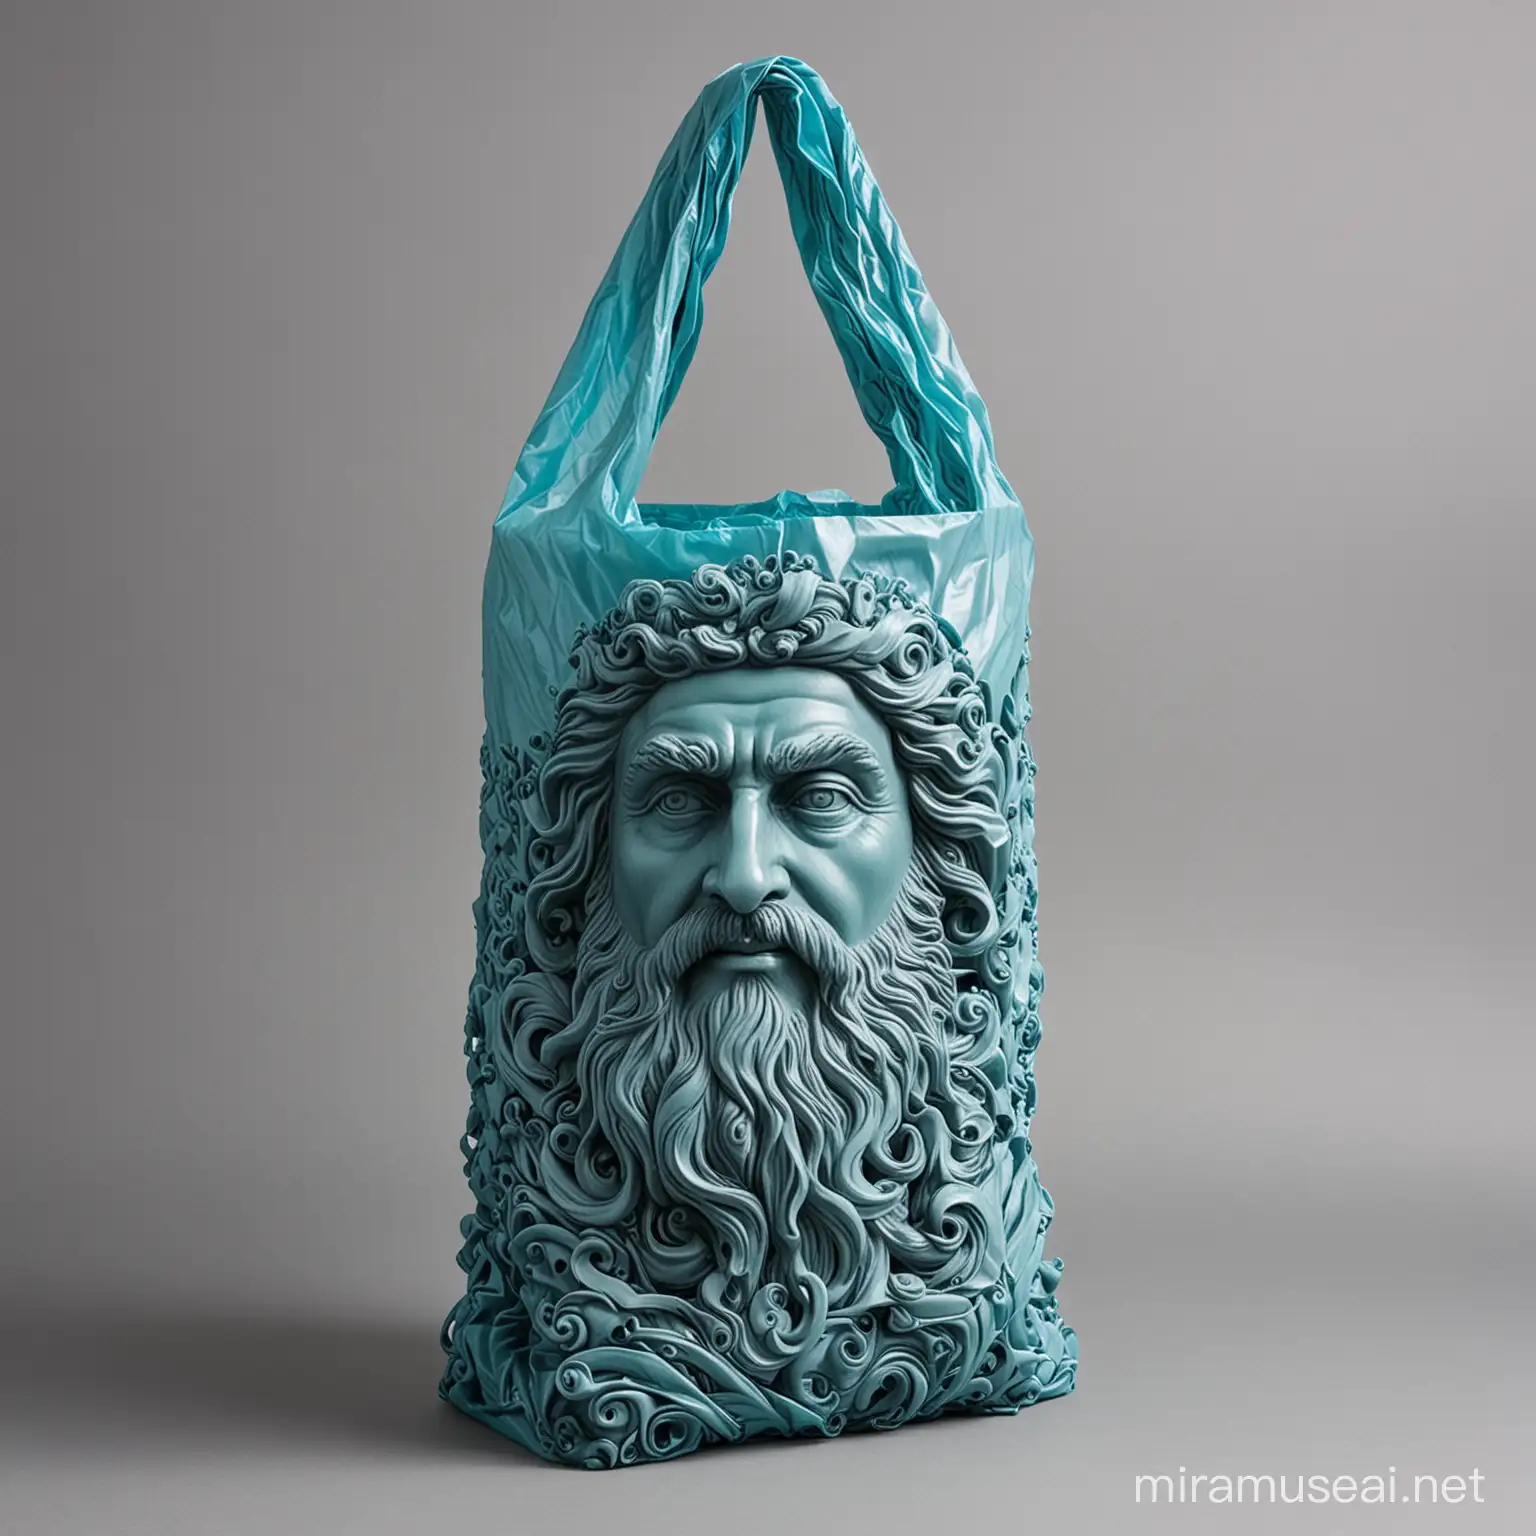 Poseidon recycled plastic bag